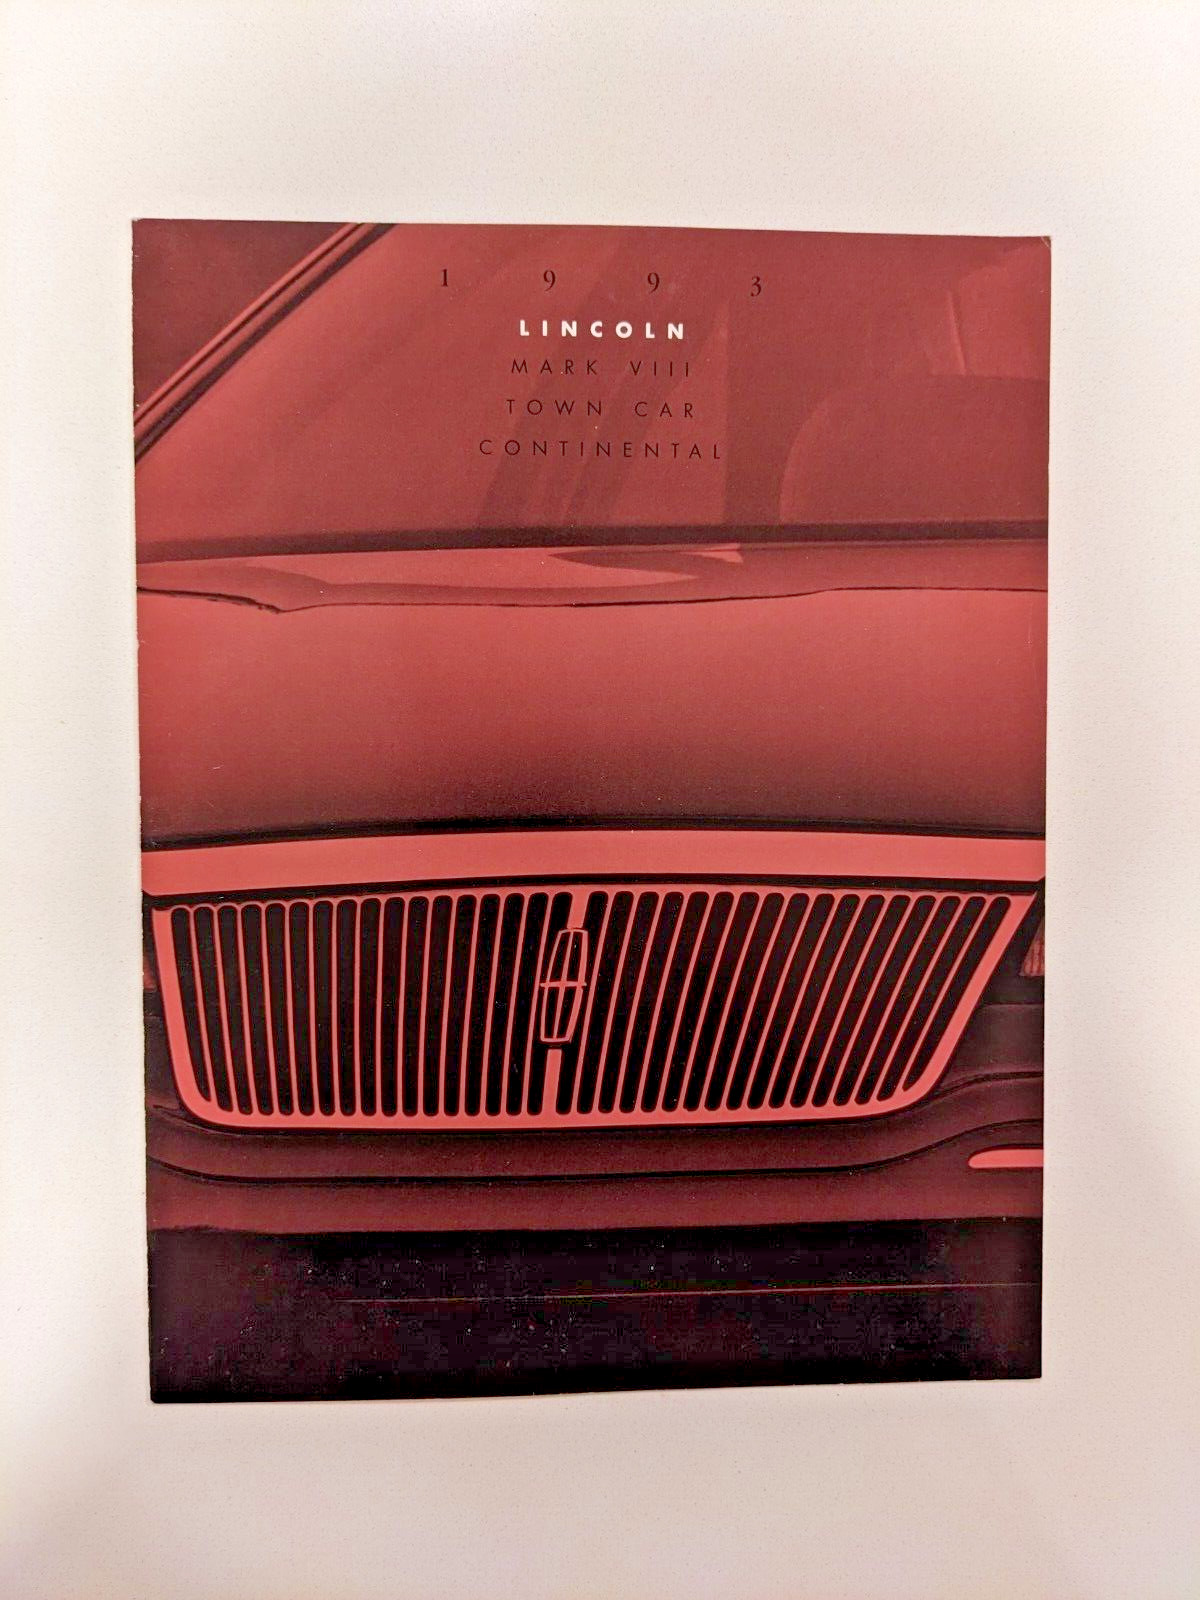 1993 Lincoln Catalog Brochure Continental Town Car, Mark VIII Excellent Original